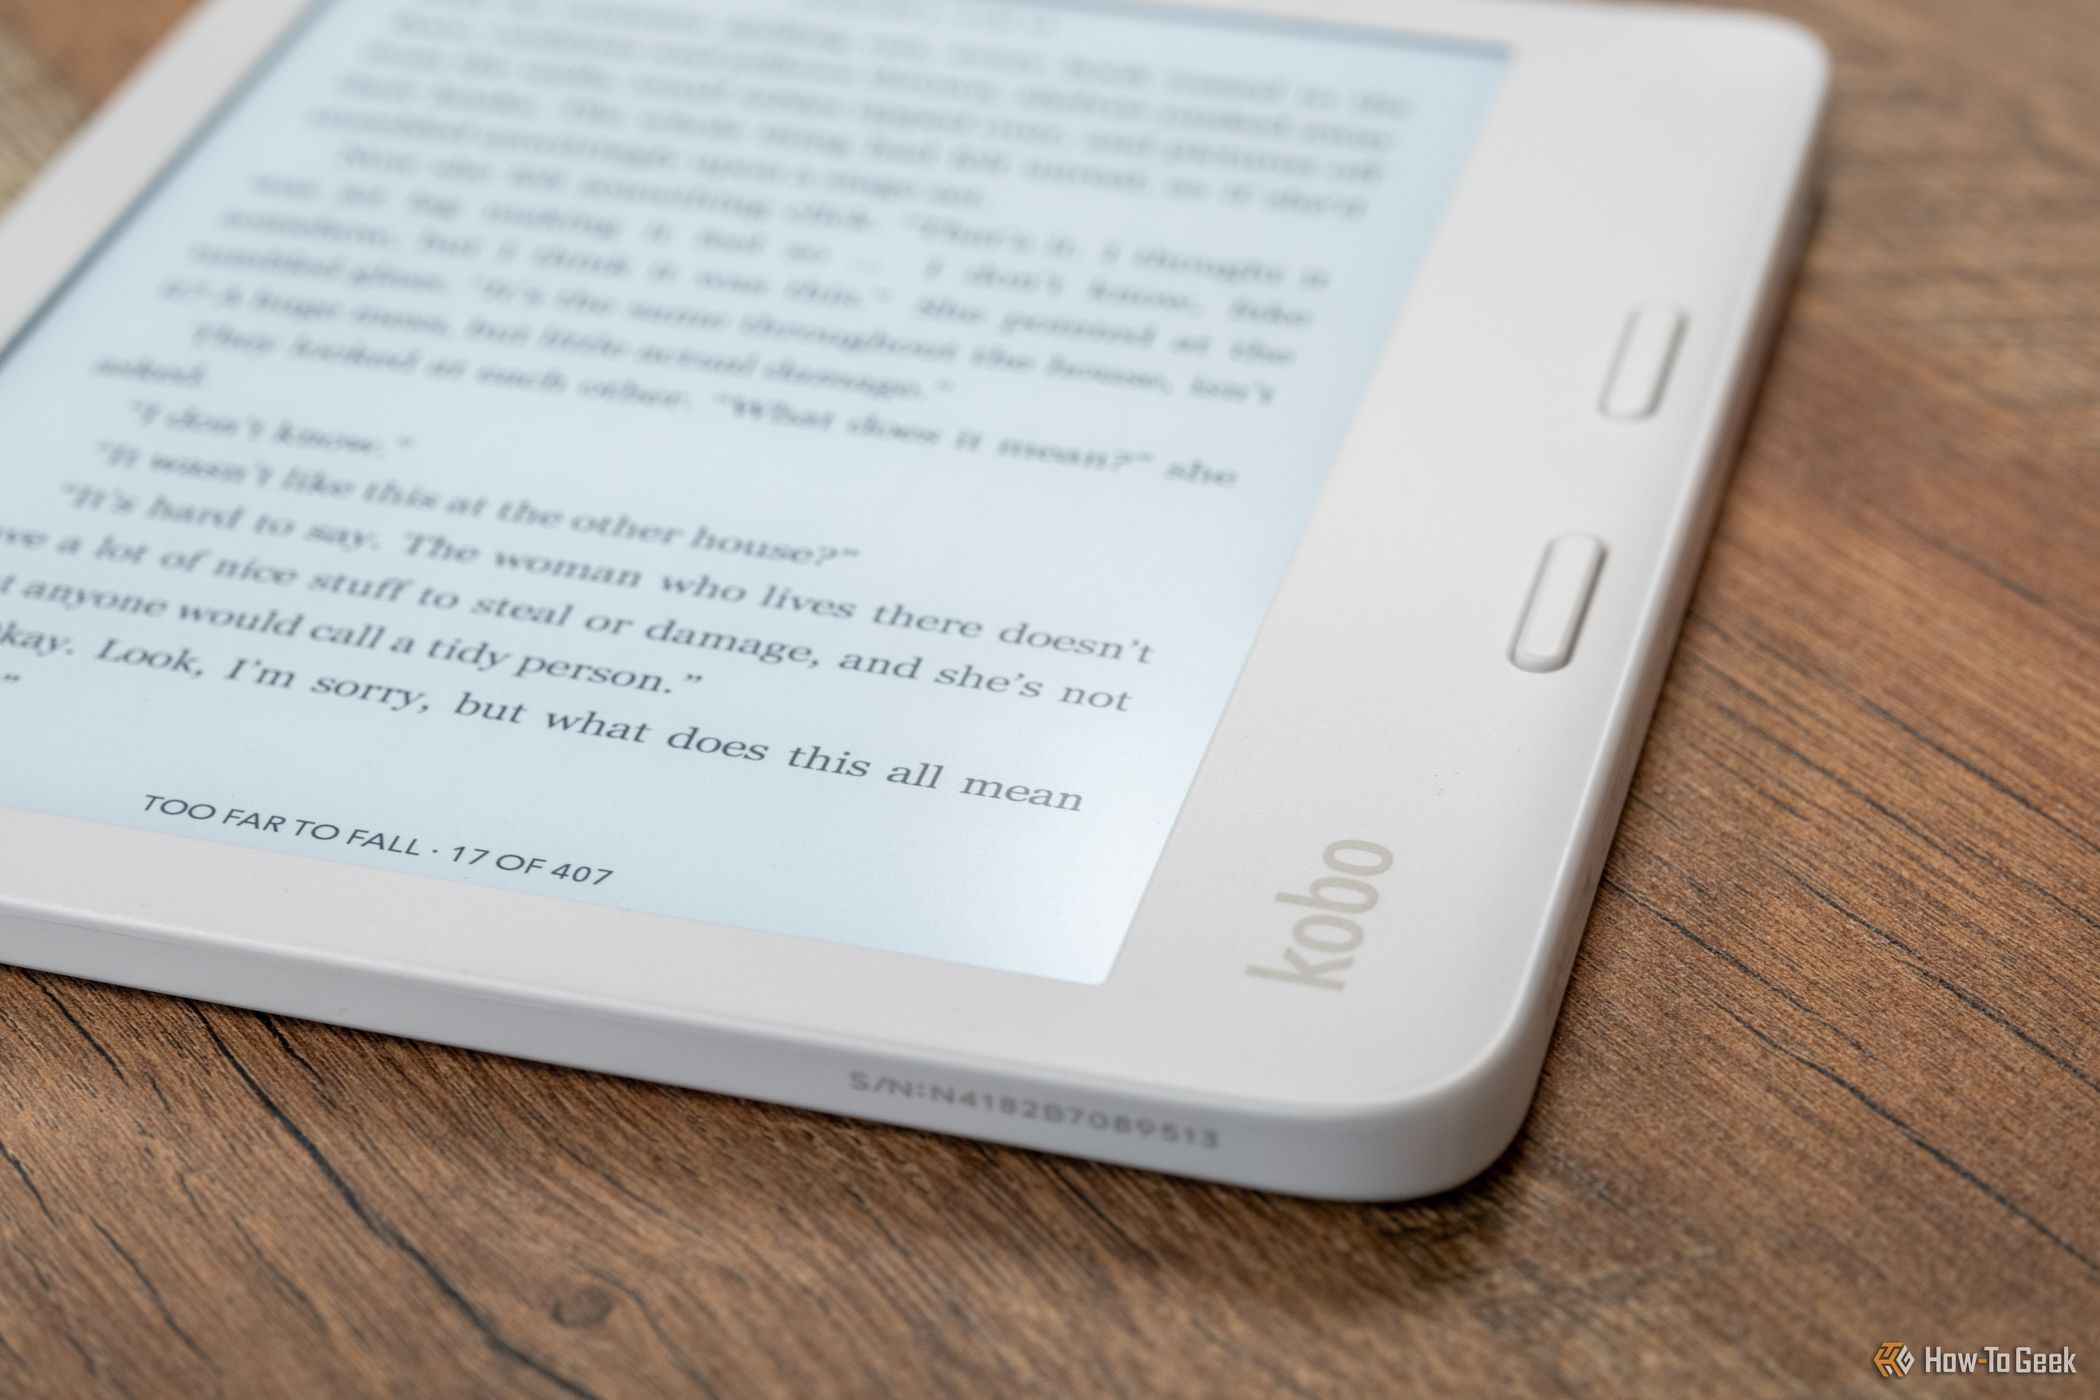 Kobo Libra H2O Review: Digital Reading Made Easy and Waterproof